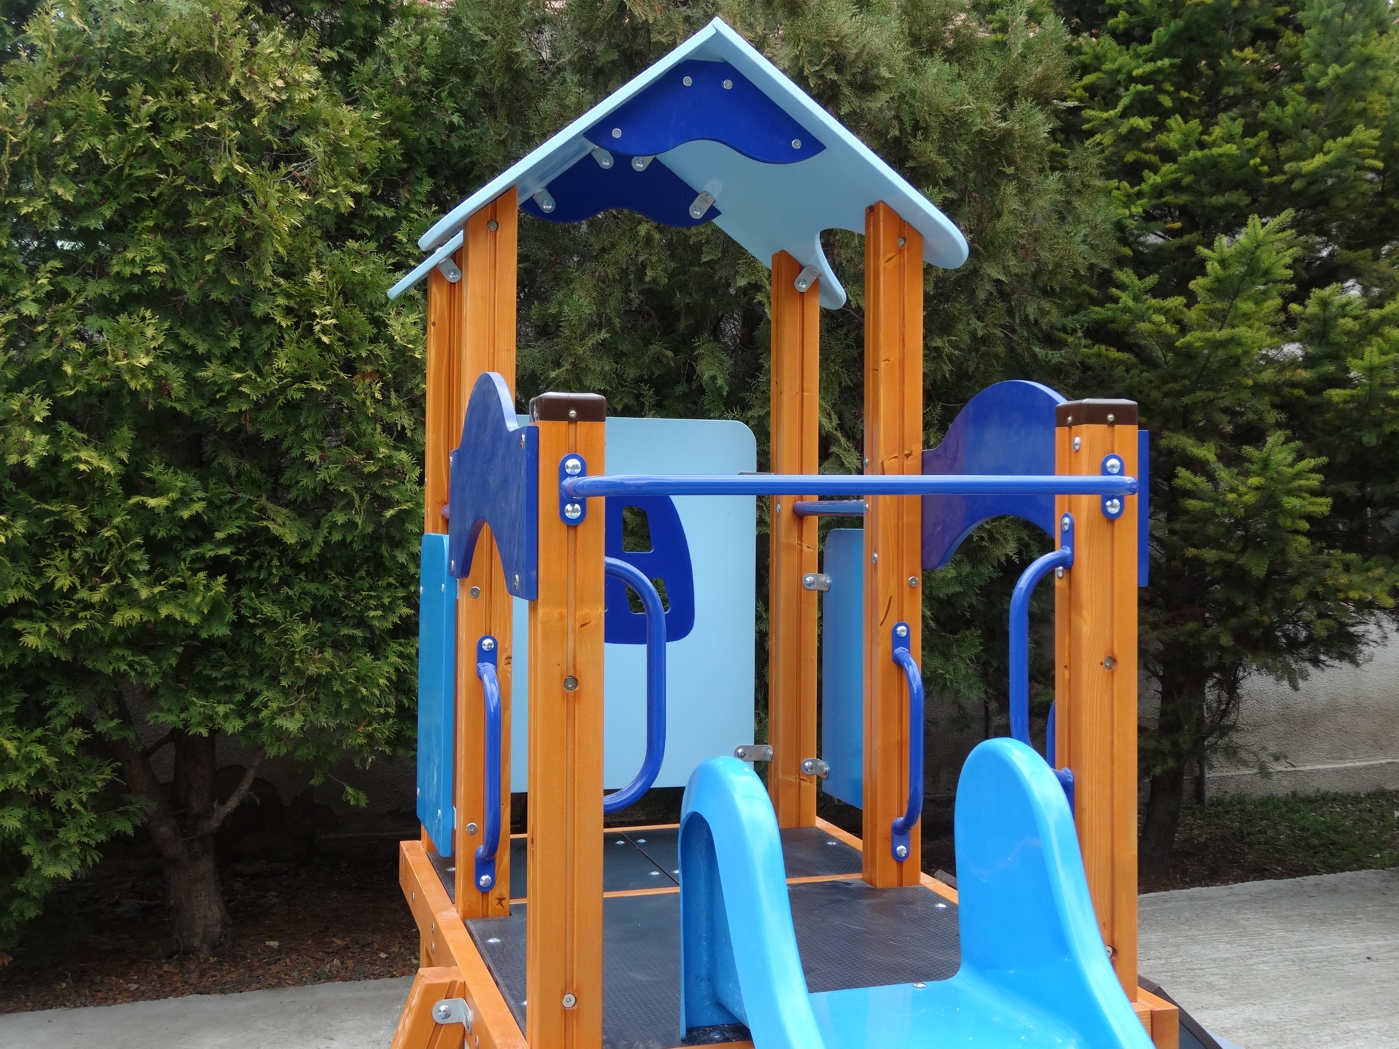 Combined playground equipment, model КД88